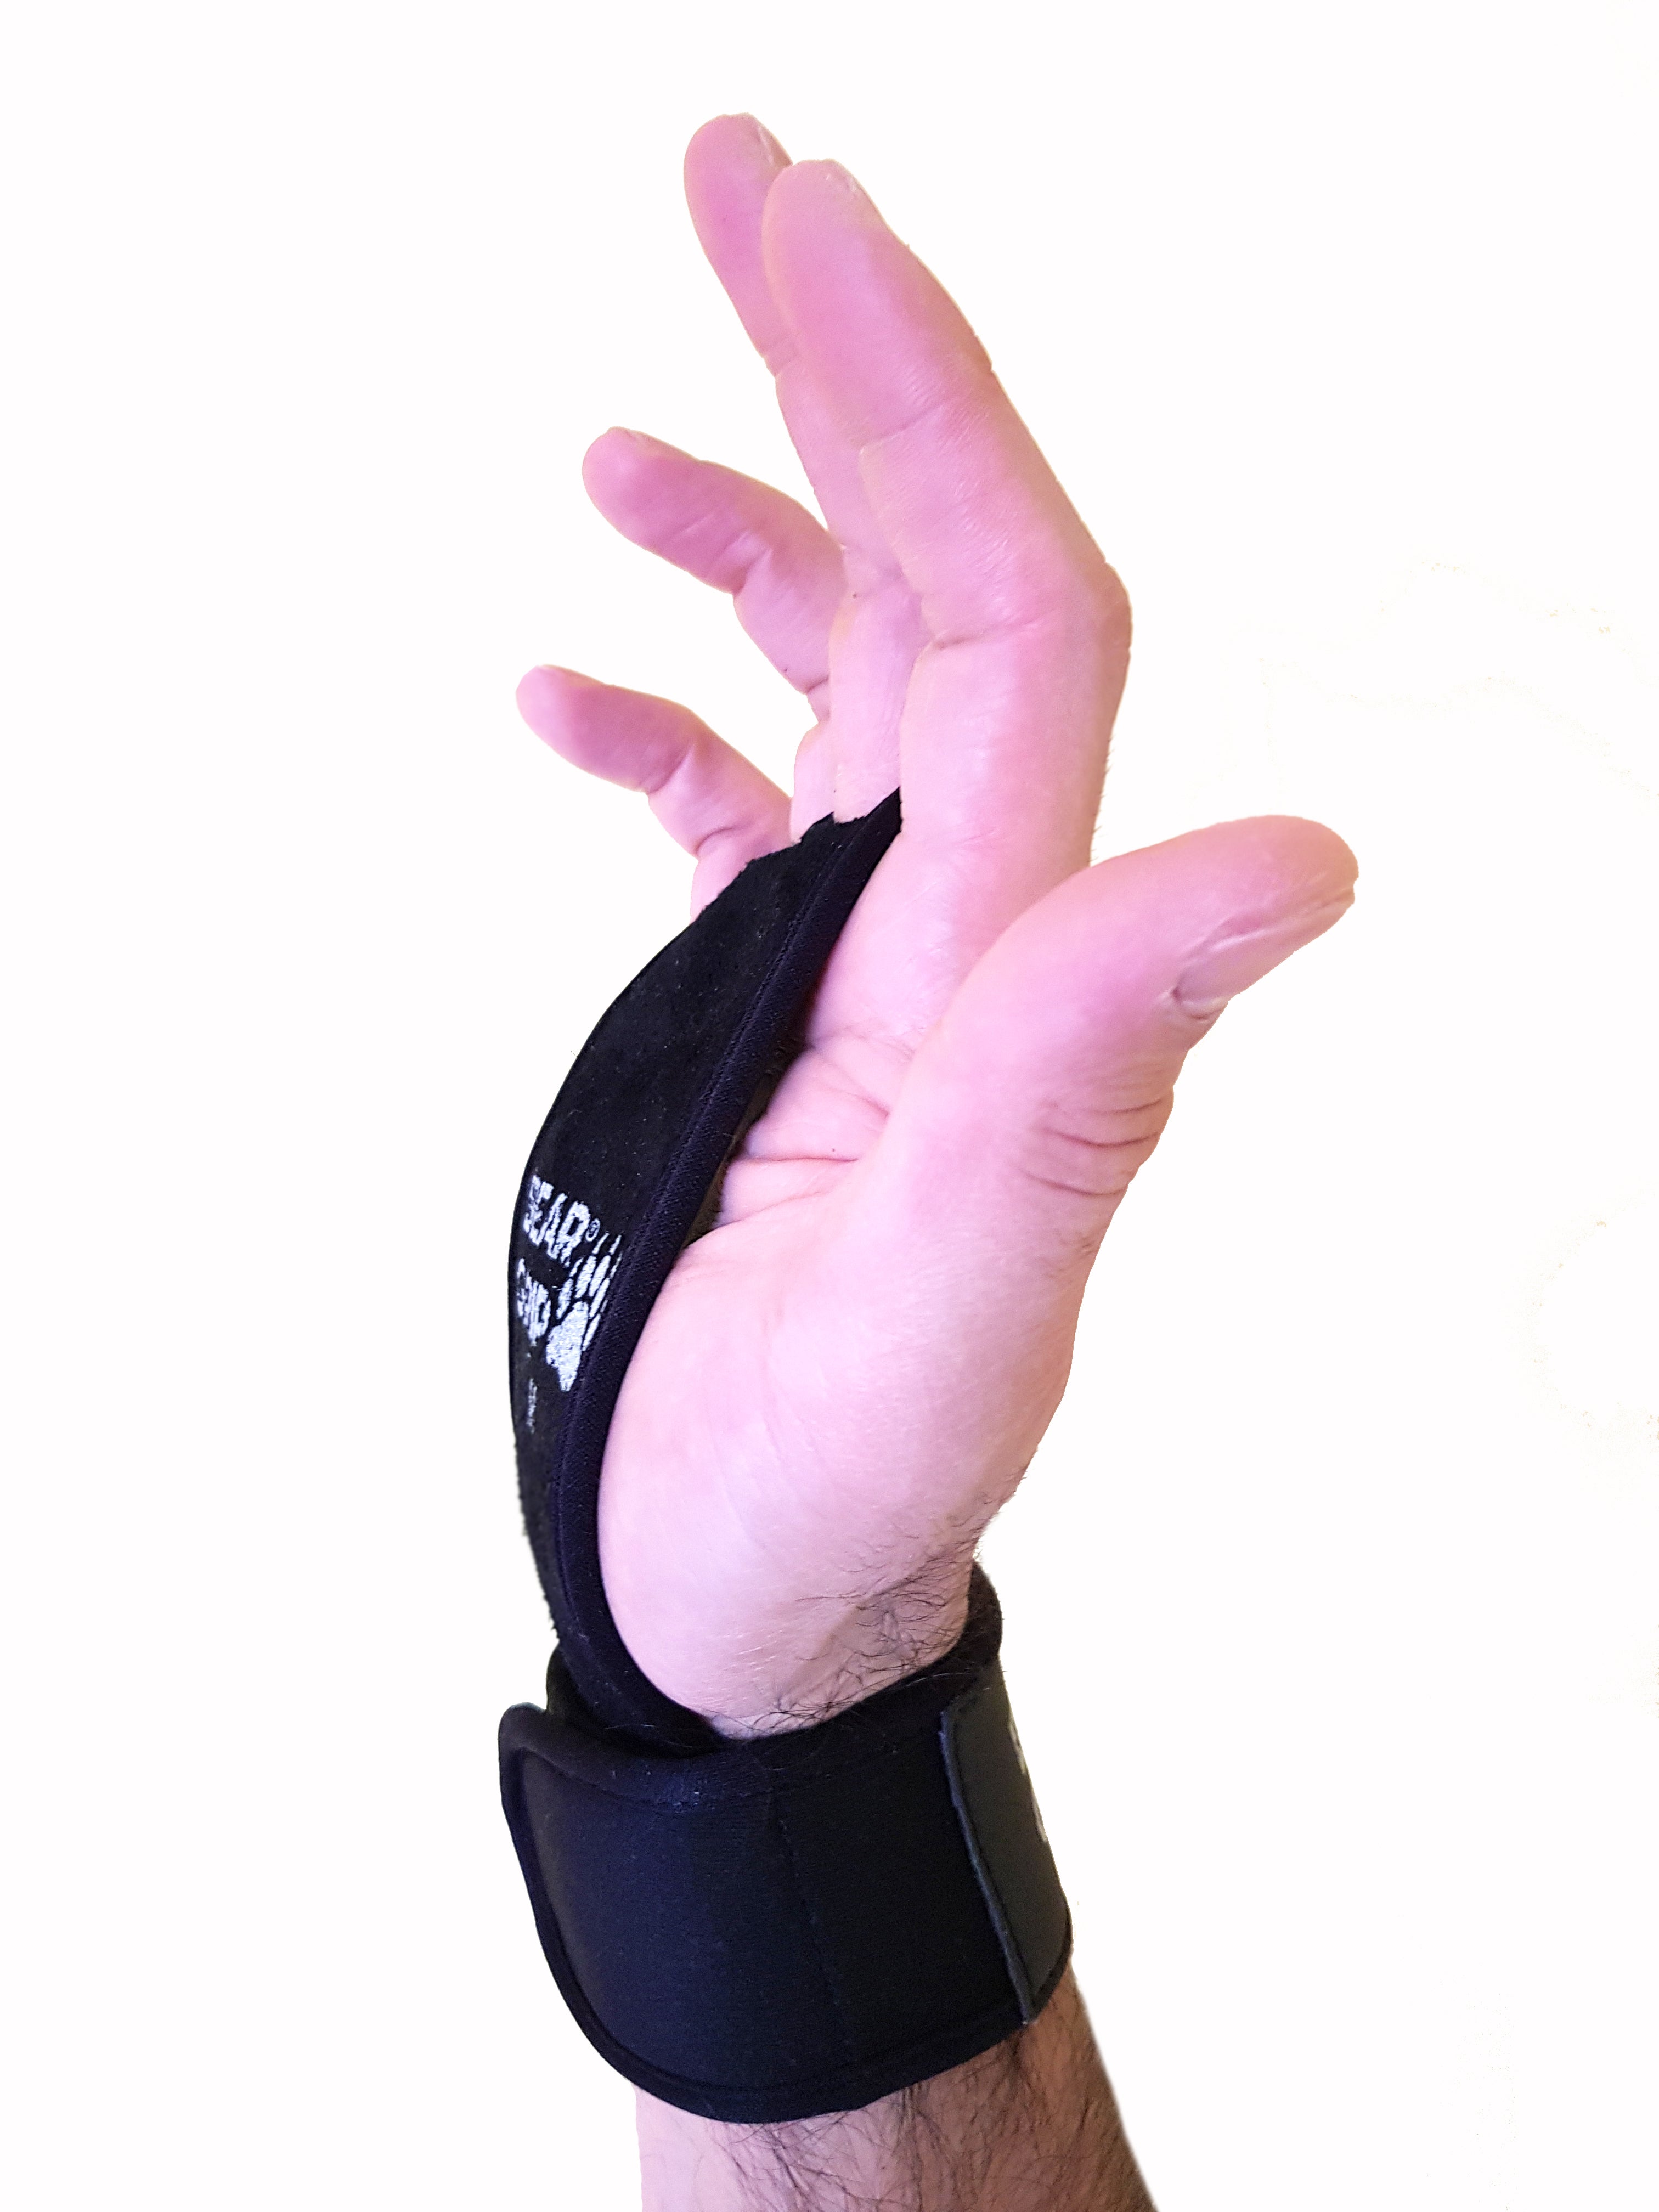 BEAR GRIP Crossfit Grip Integrated Wrist Wrap